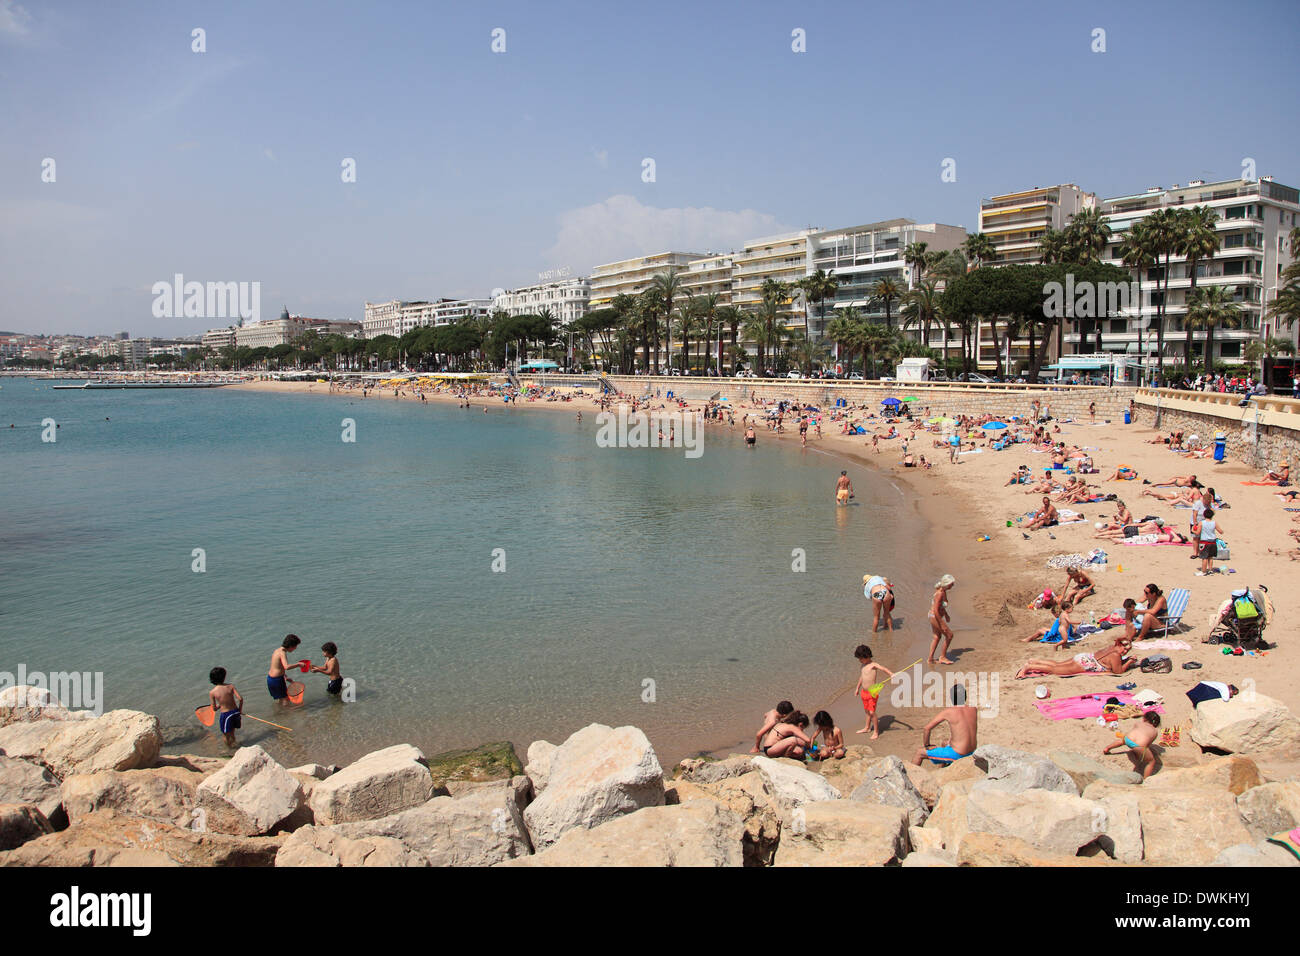 Public Beach, La Croisette, Cannes, Cote d'Azur, Alpes Maritimes, Provence, French Riviera, France, Mediterranean, Europe Stock Photo